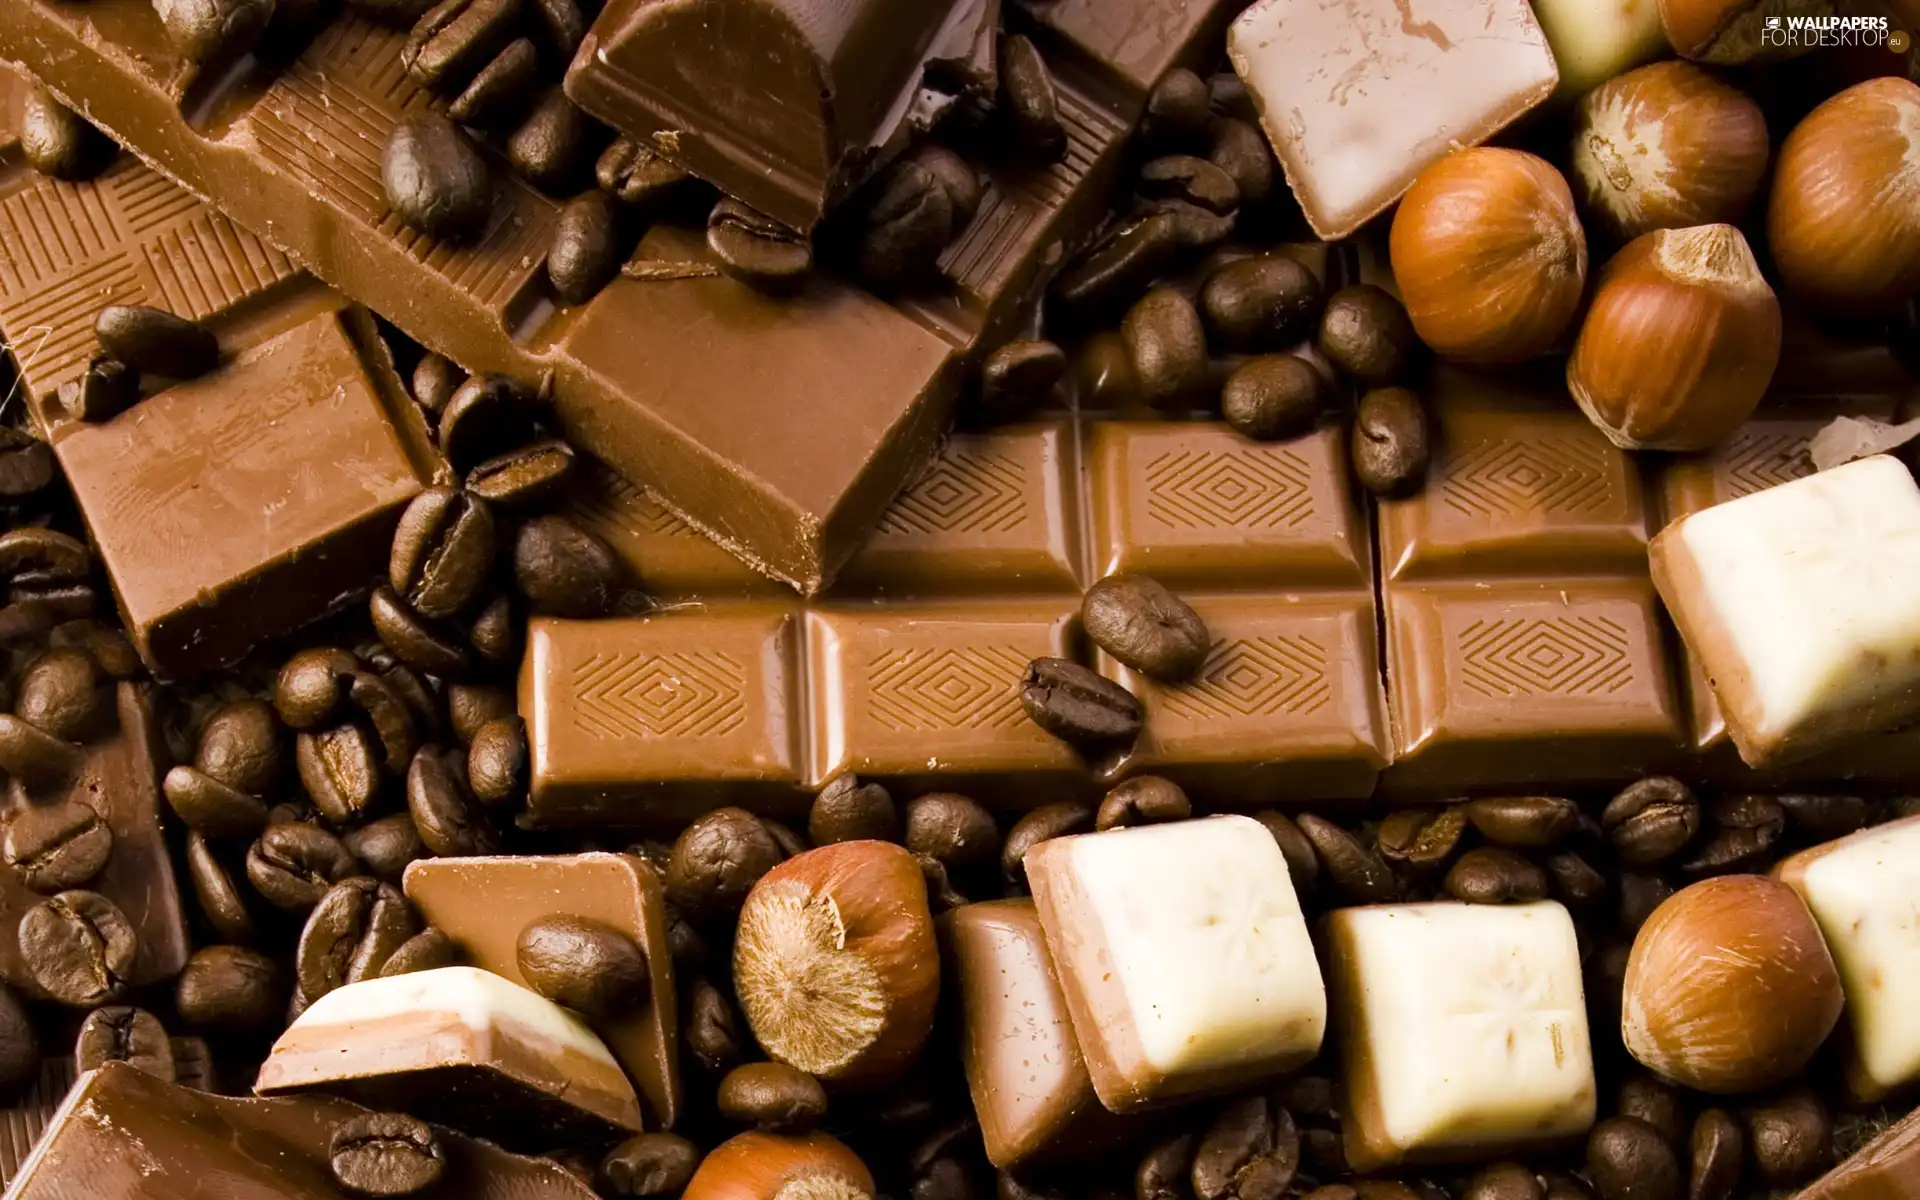 chocolate, coffee, nuts, grains